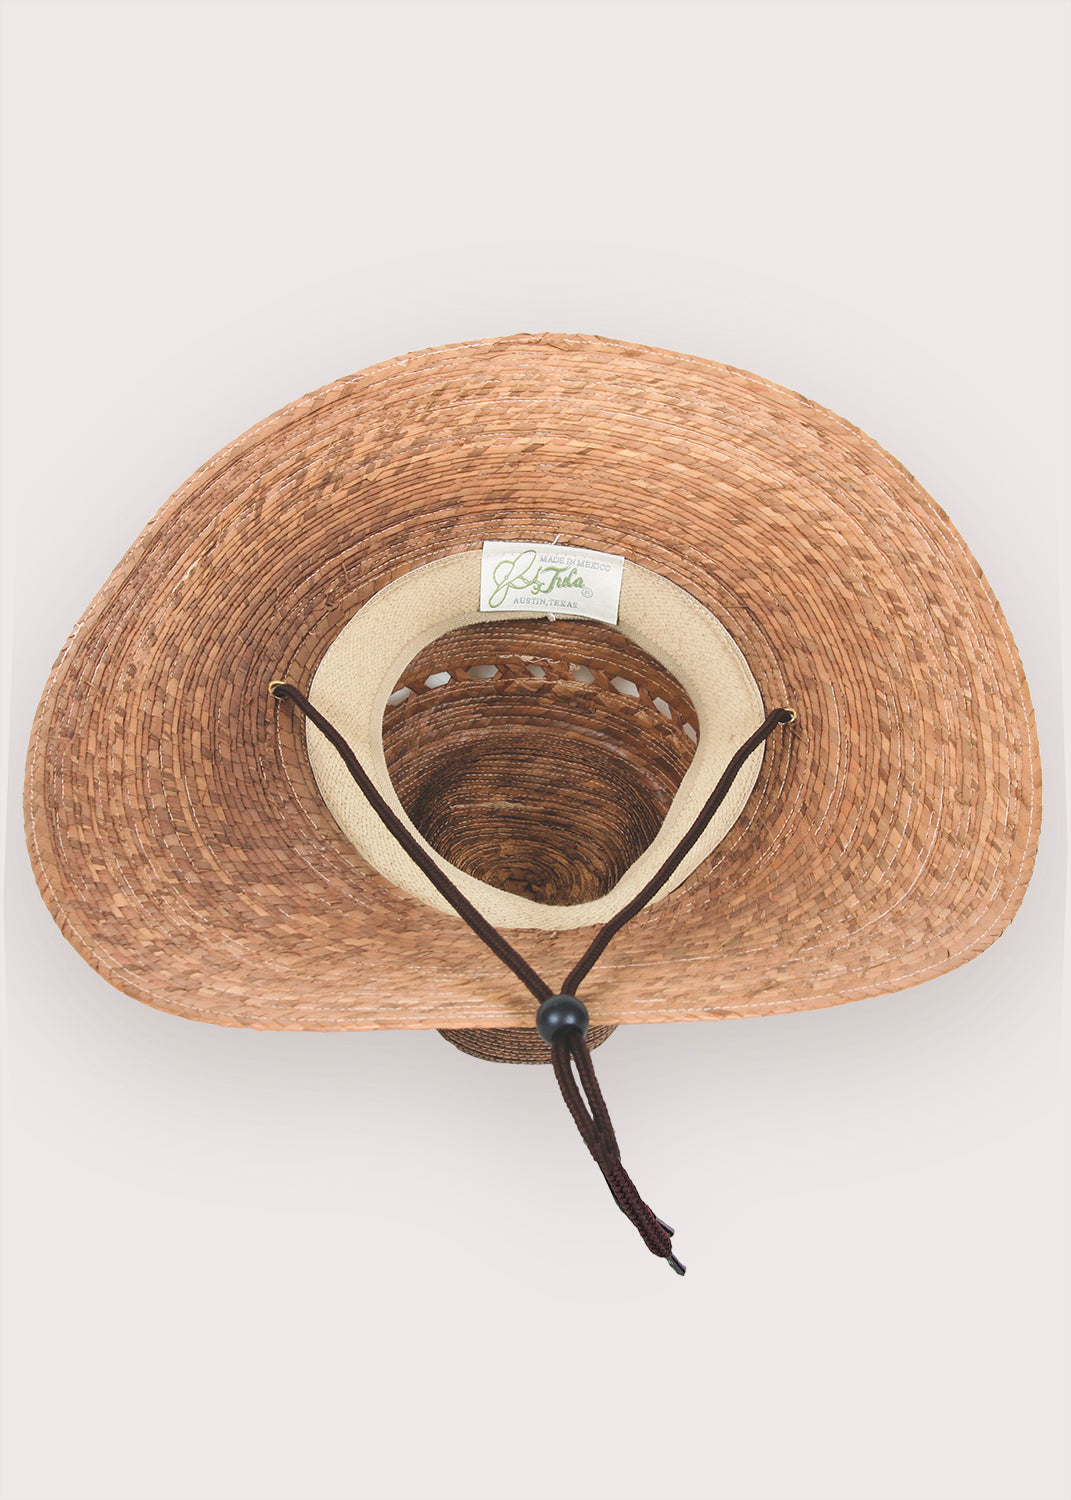 & Gardener Lattice Hat | Handwoven Palm Hat | Tula Hats